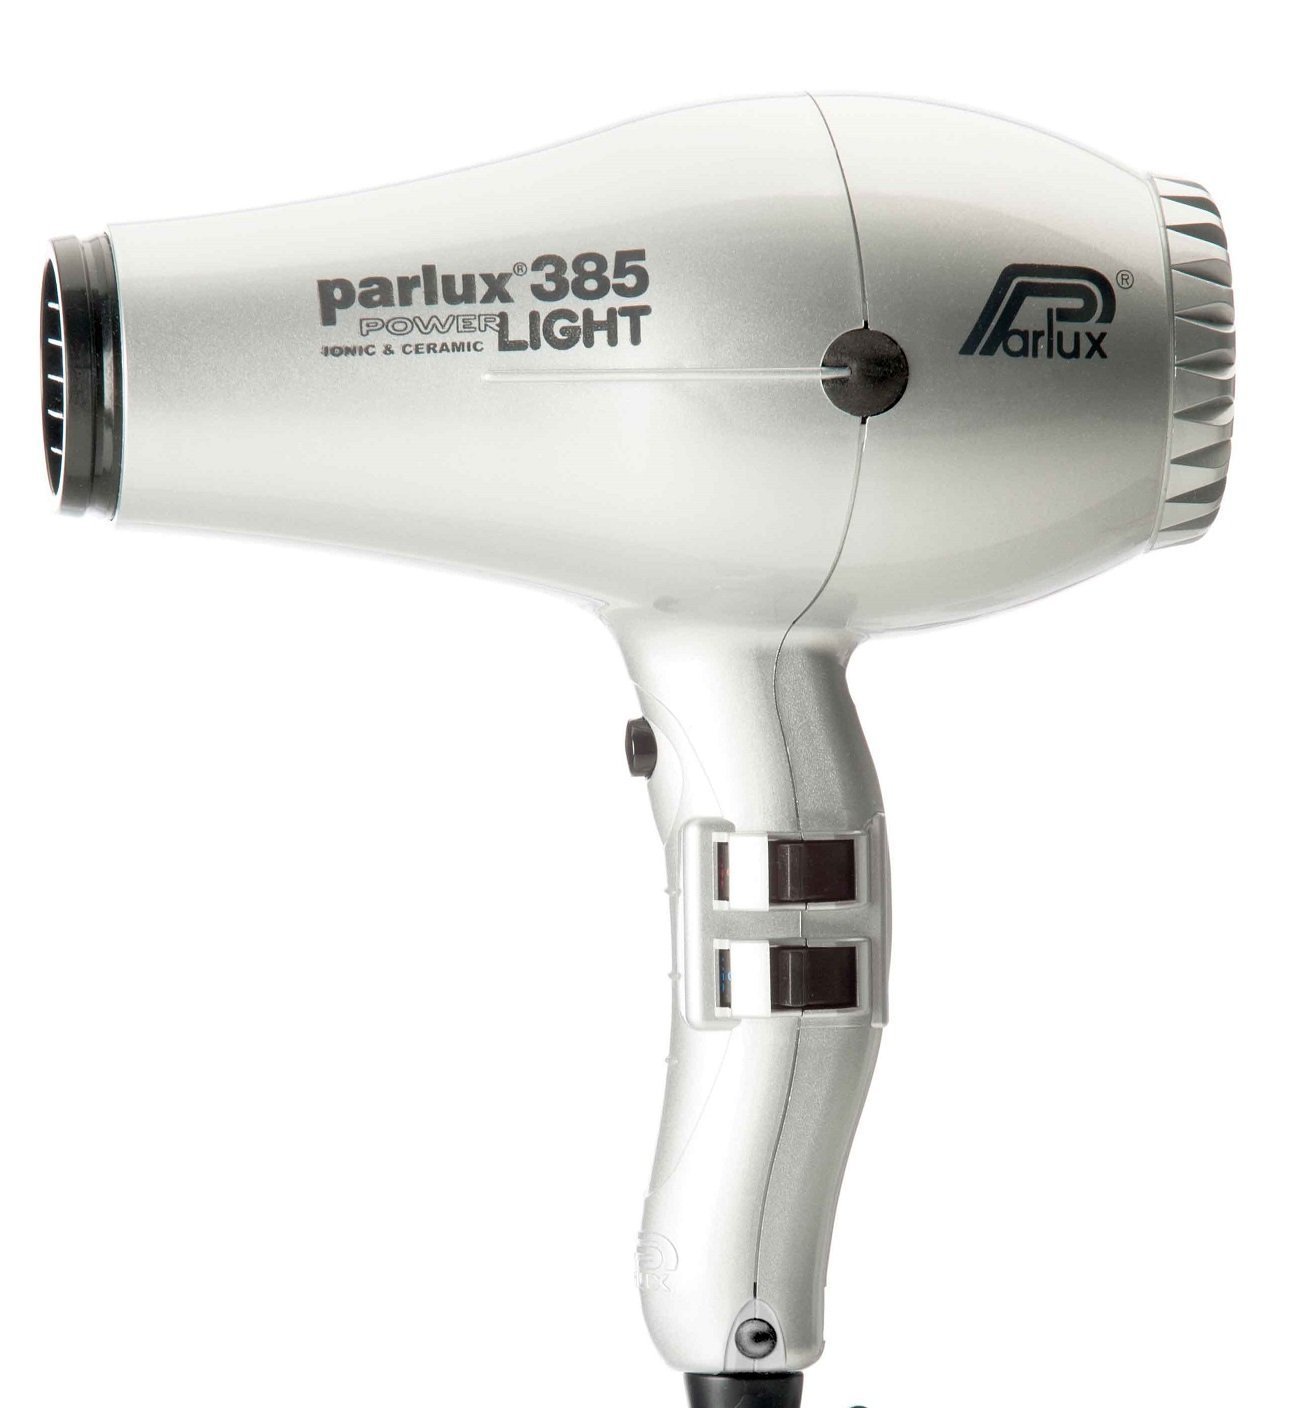 Parlux Phon Parlux 385 Powerlight Silver